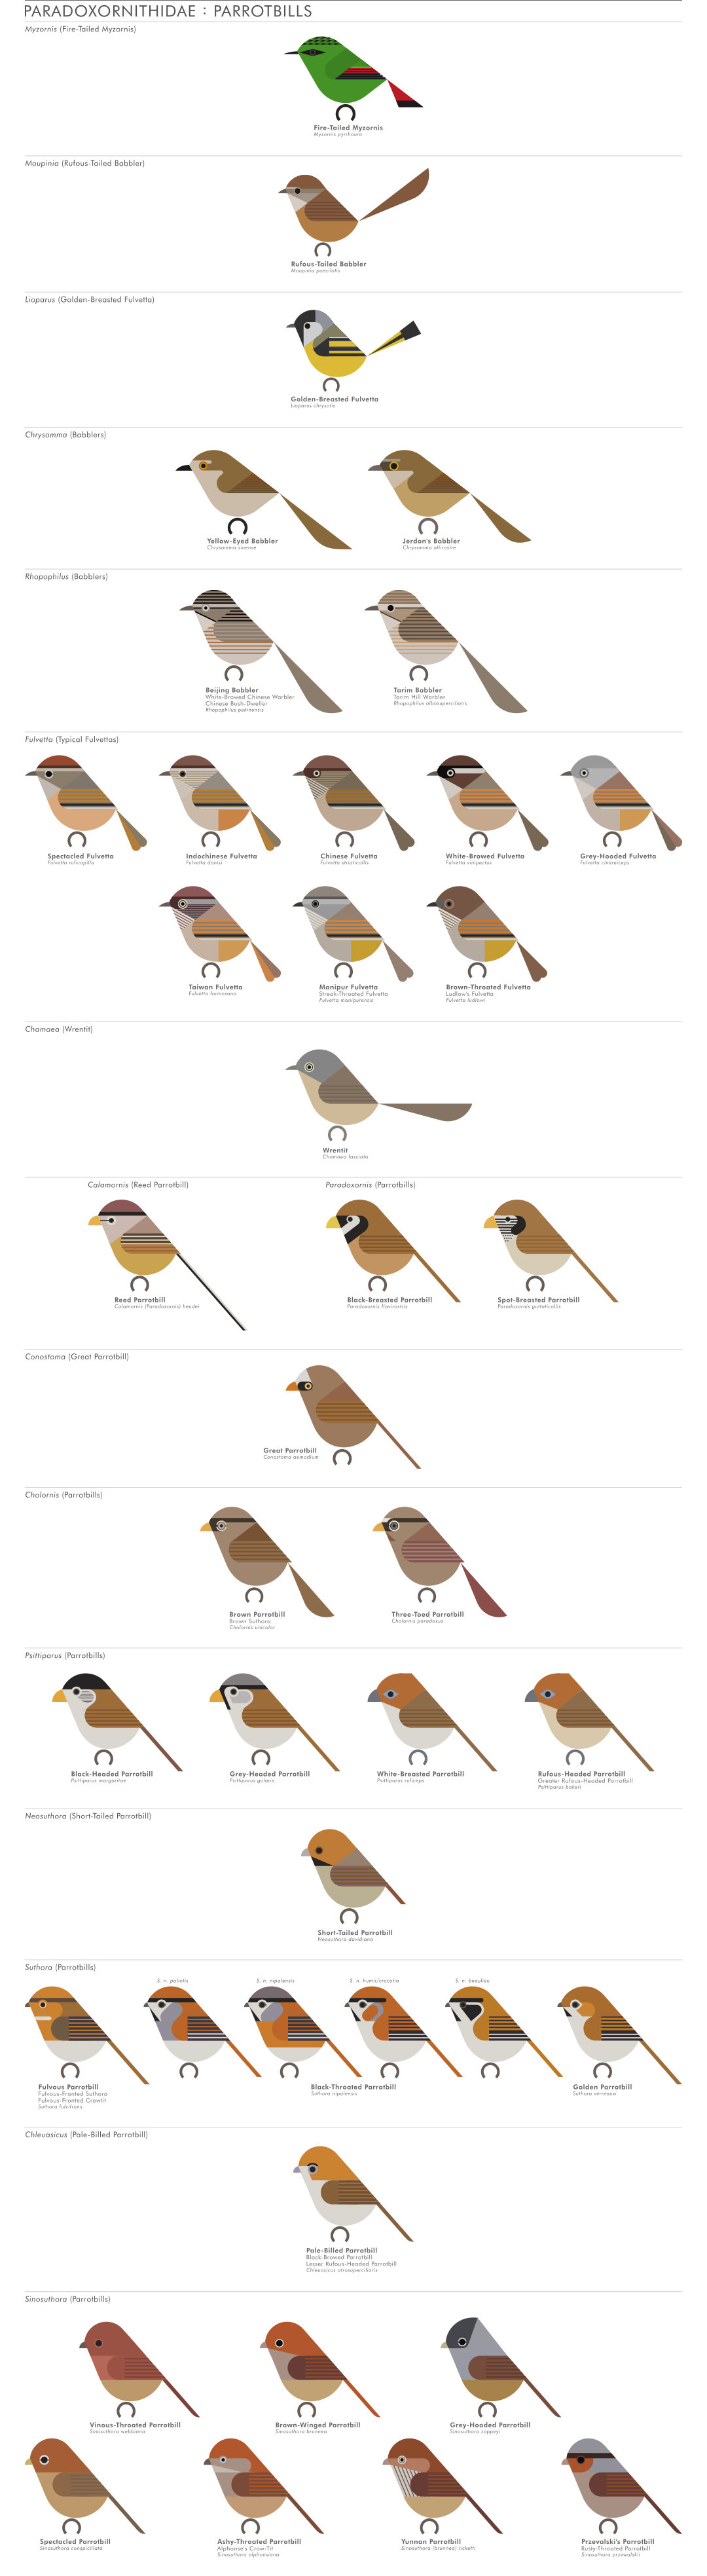 scott partridge - AVE - avian vector encyclopedia - parrotbills - bird vector art